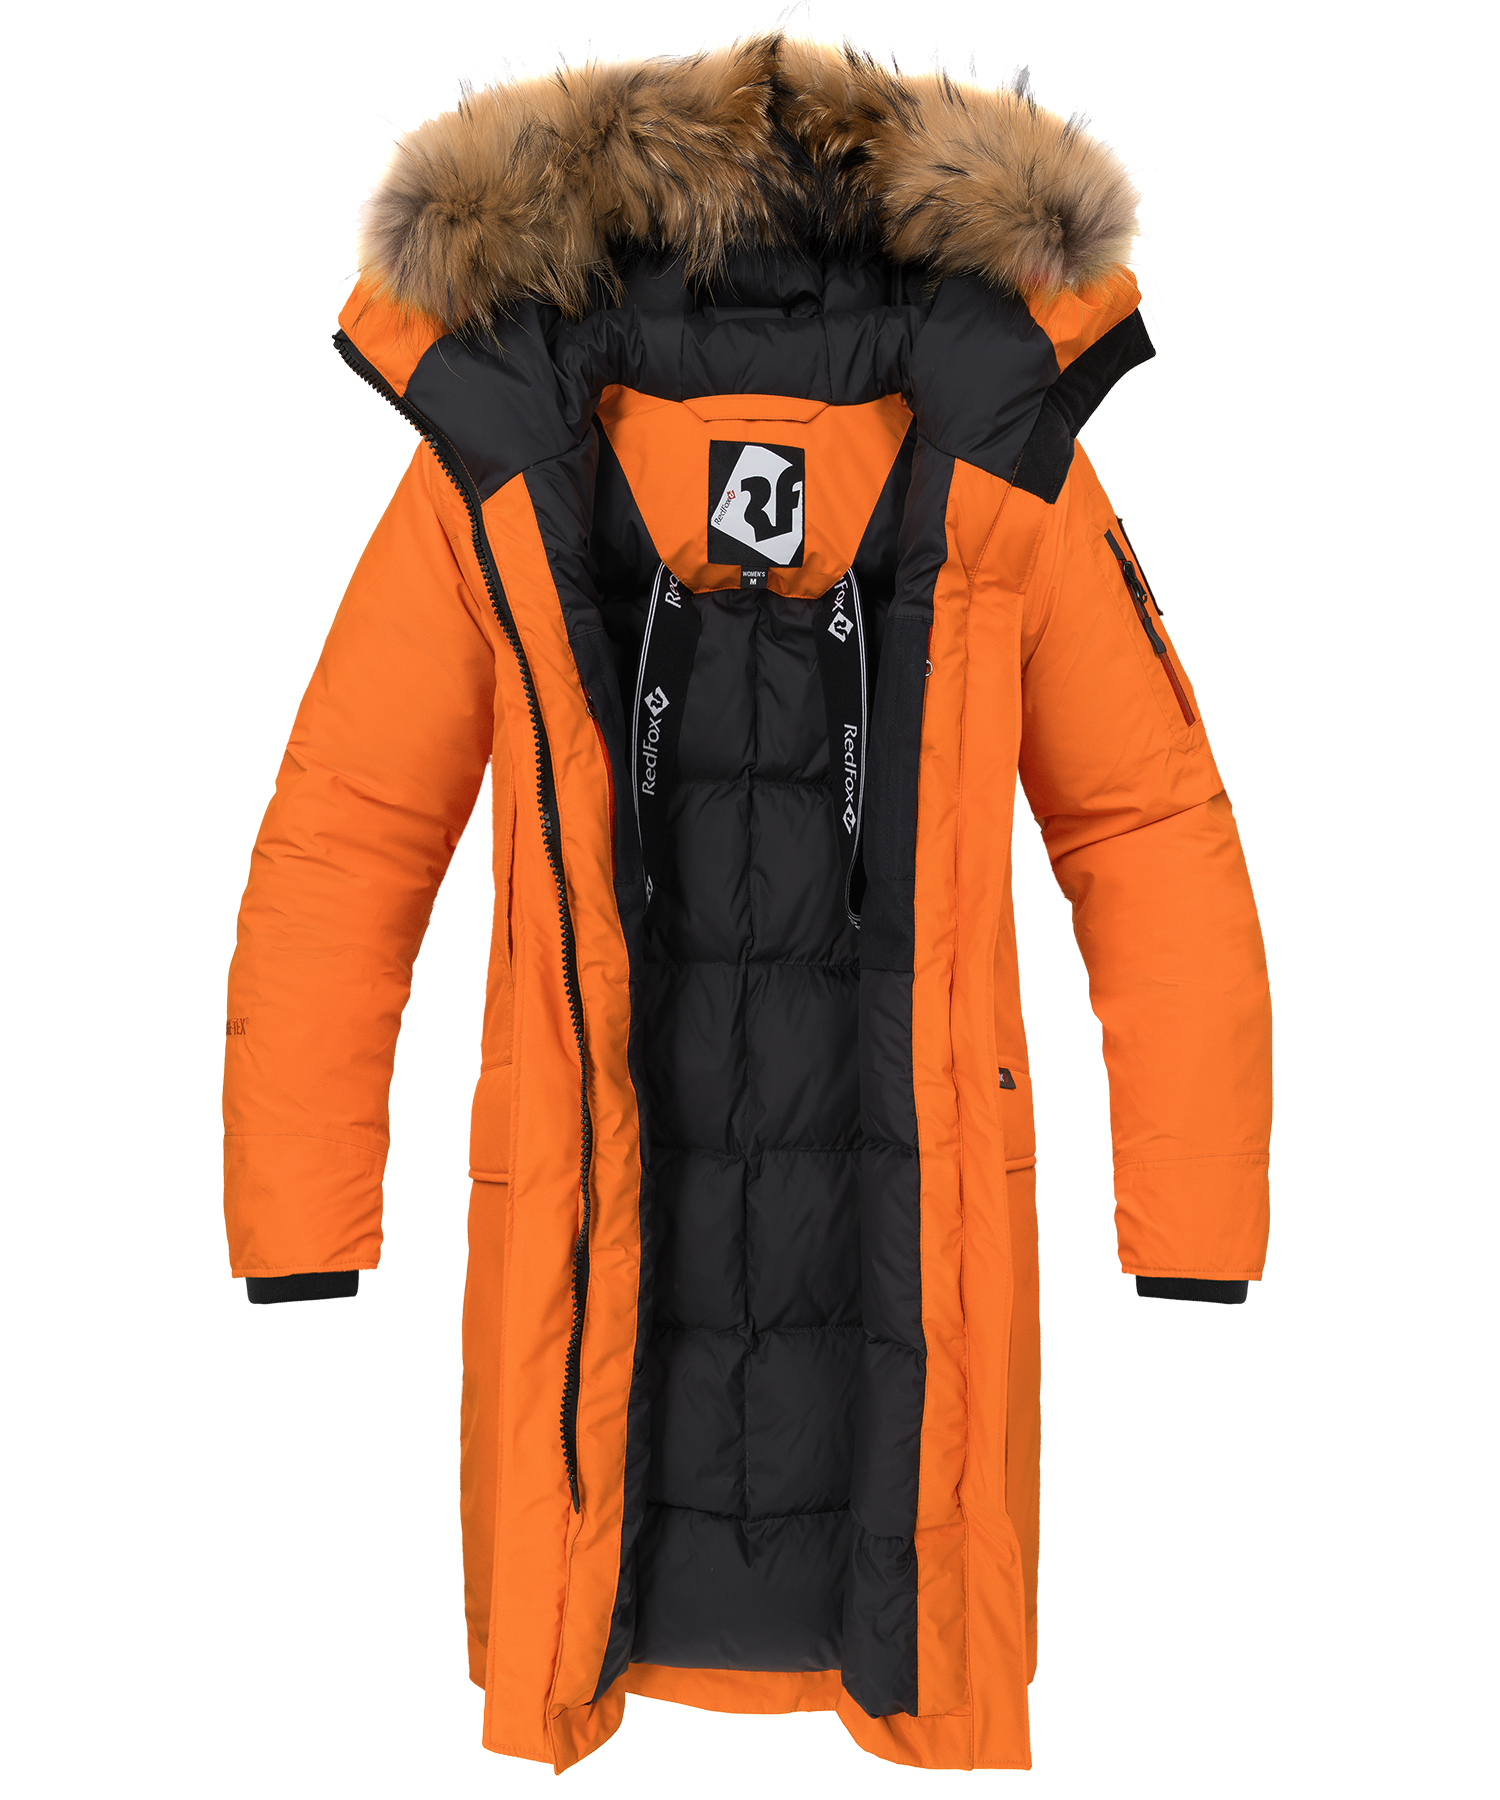 Куртка fox мужская. Куртка Аляска РЕДФОКС. Ред Фокс парка мужская Аляска. Куртка Рэд Фокс Аляска. Зимняя куртка Red Fox REDFOX мужская.